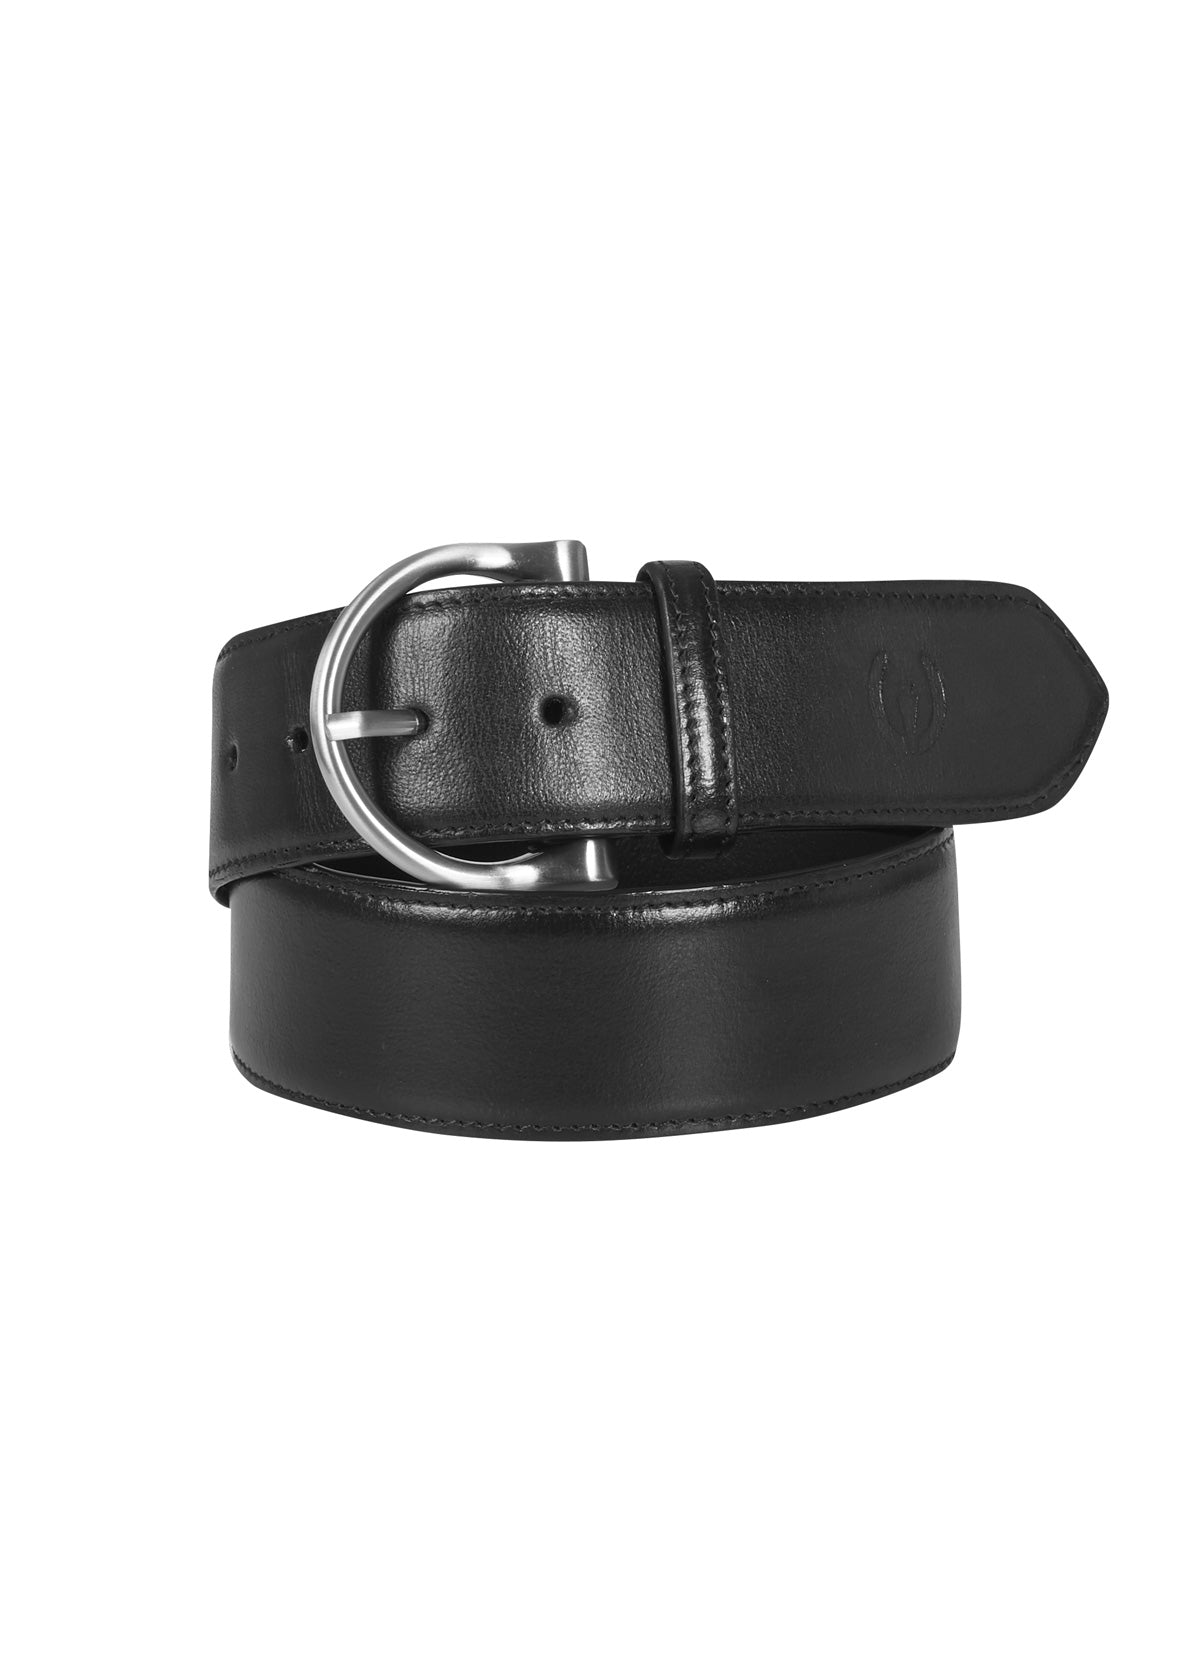 Equestrian Pressed Croc Leather Belt - 2 Inch - Black